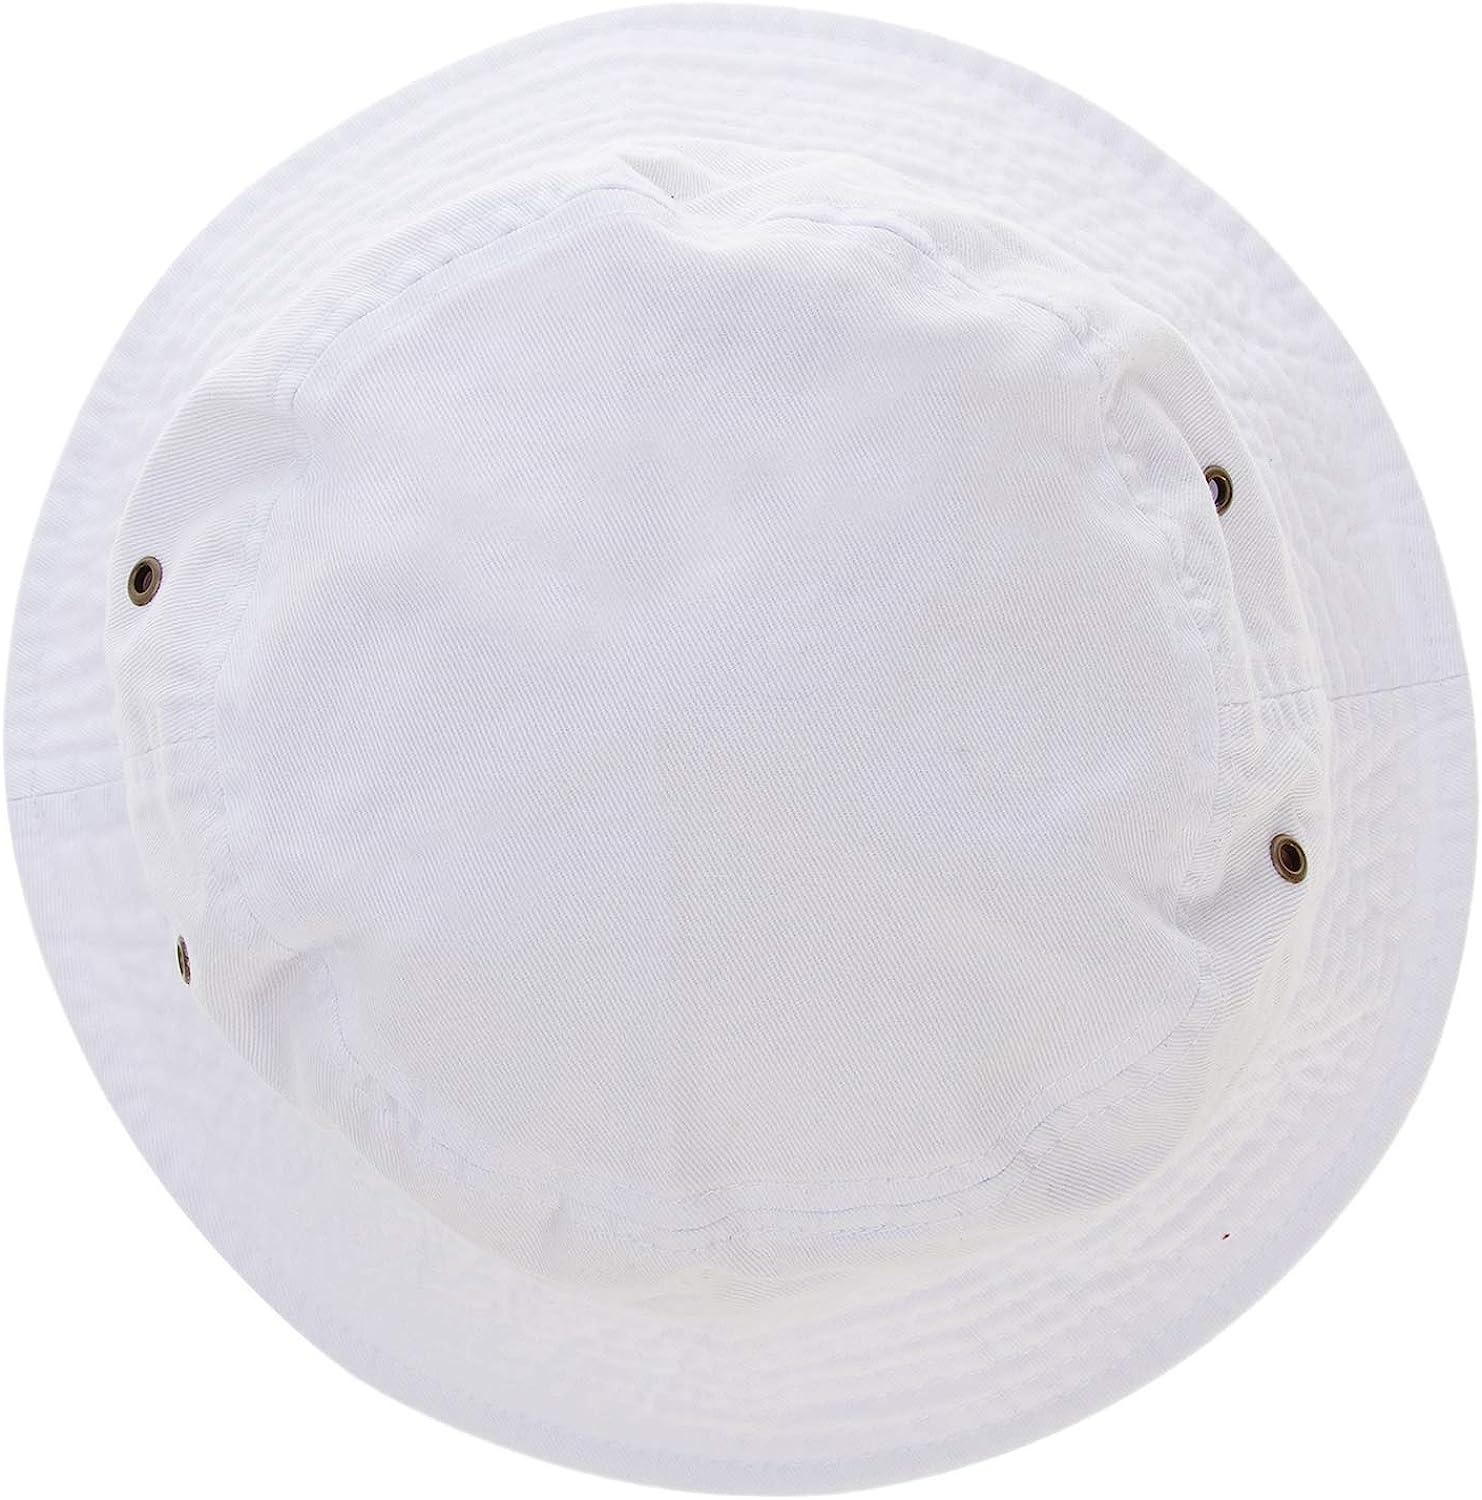 Bandana.com 100% Cotton Bucket Hat for Men, Women, Kids - Summer